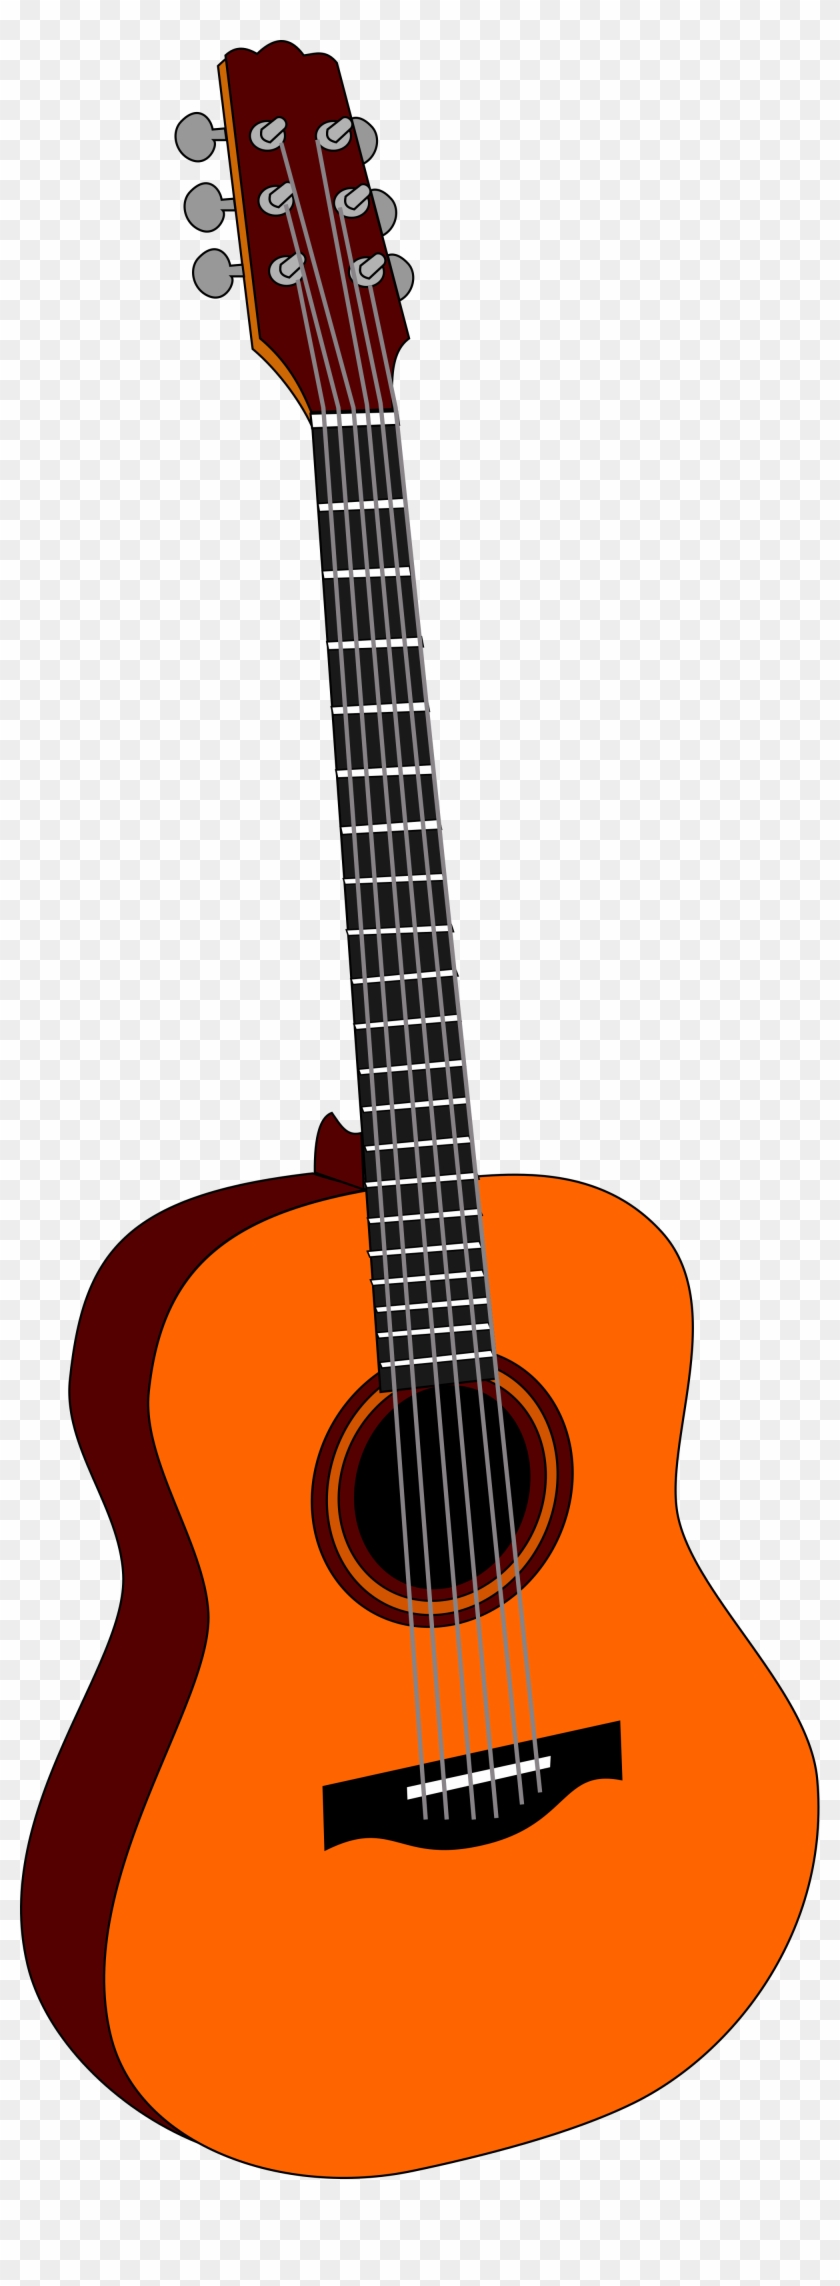 Guitar 1 Clipart - Greg Bennett Acoustic Guitar #183464